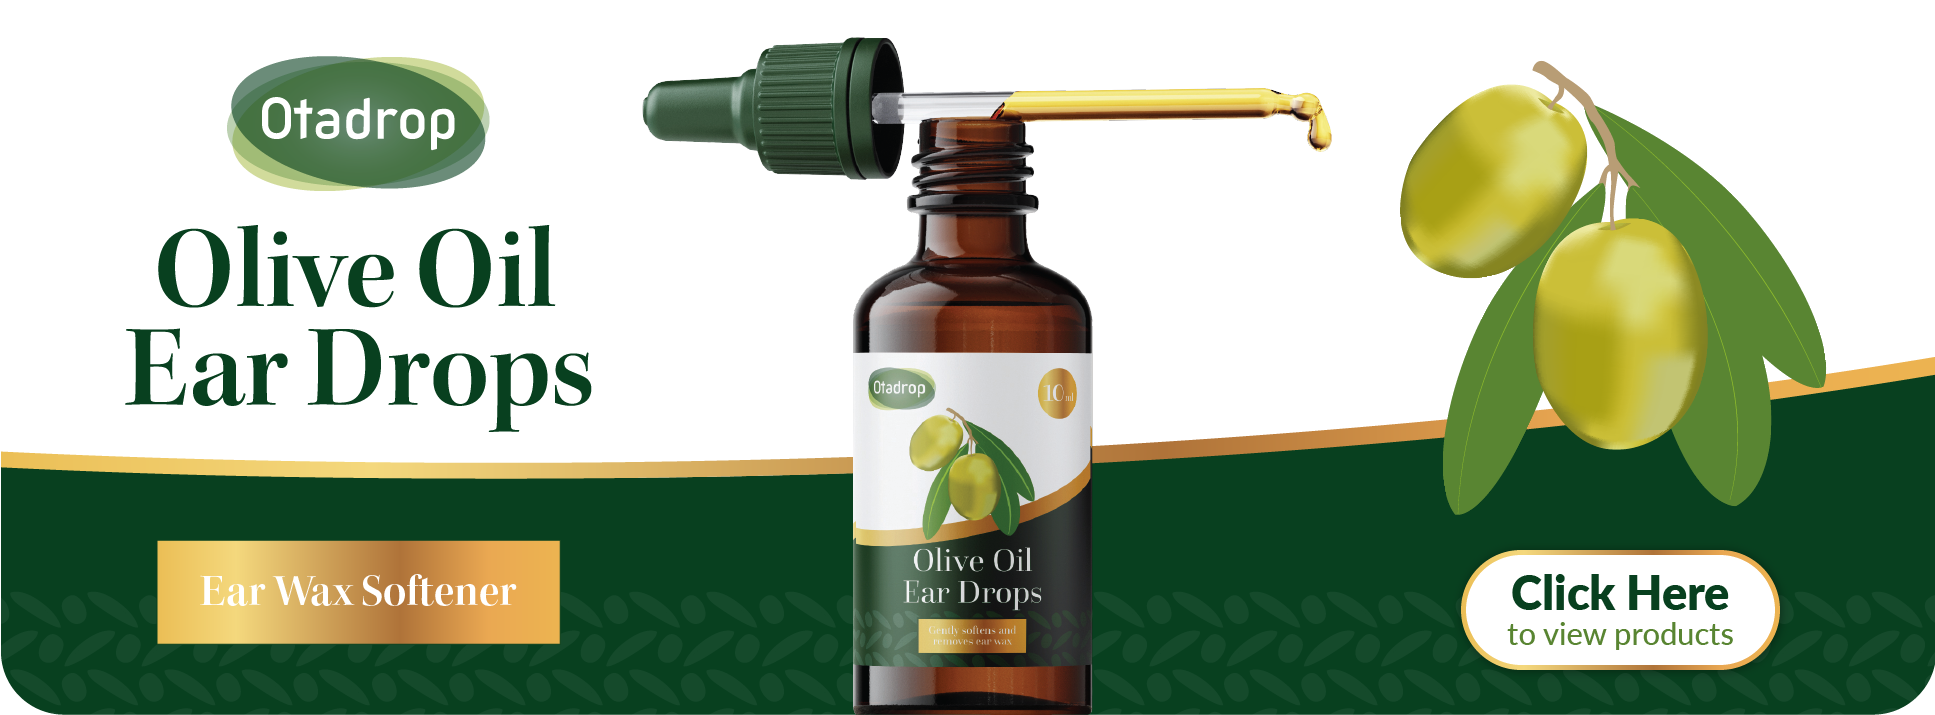 Otadrop Olive Oil Ear Drops